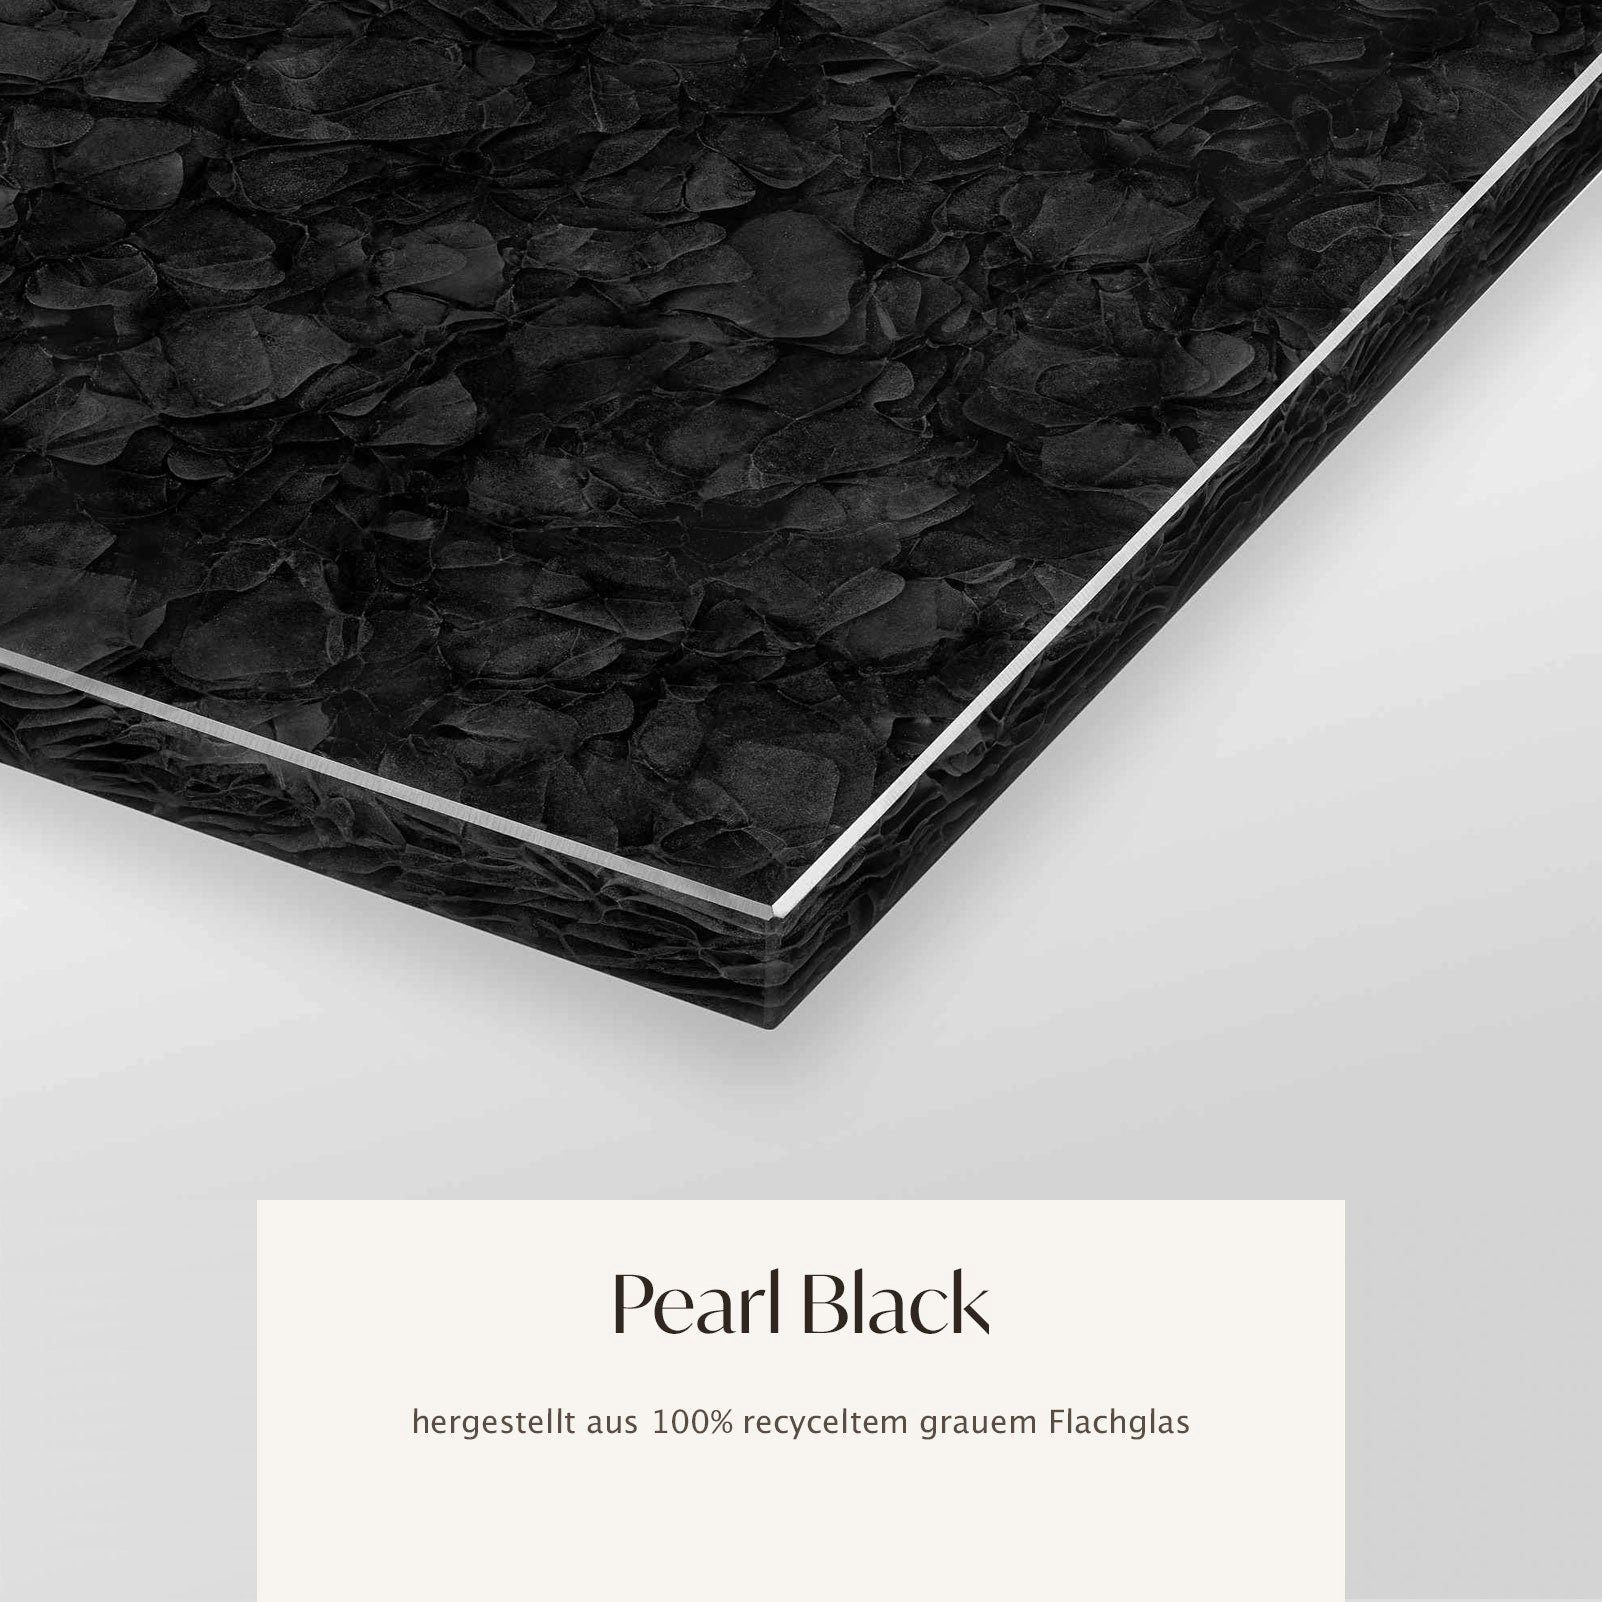 MAGNA Atelier Käseplatte GLASKERAMIK, GRONINGEN Black Pearl eckig, 30x20x2cm Glaskeramik, mit Dekotablett